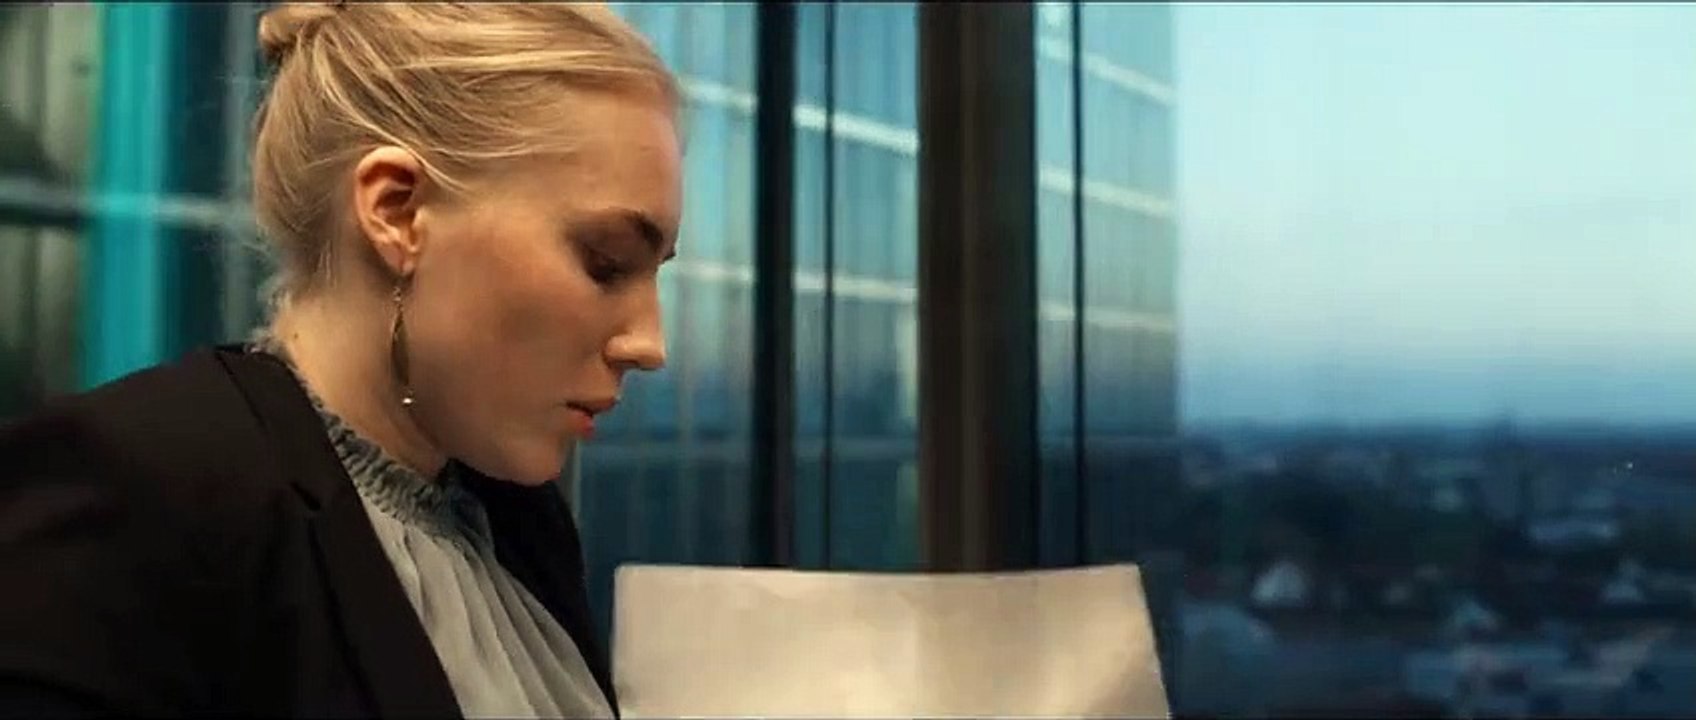 Limbo Film Trailer - Elisa Schlott, Tilman Strauss, Martin Semmelrogge